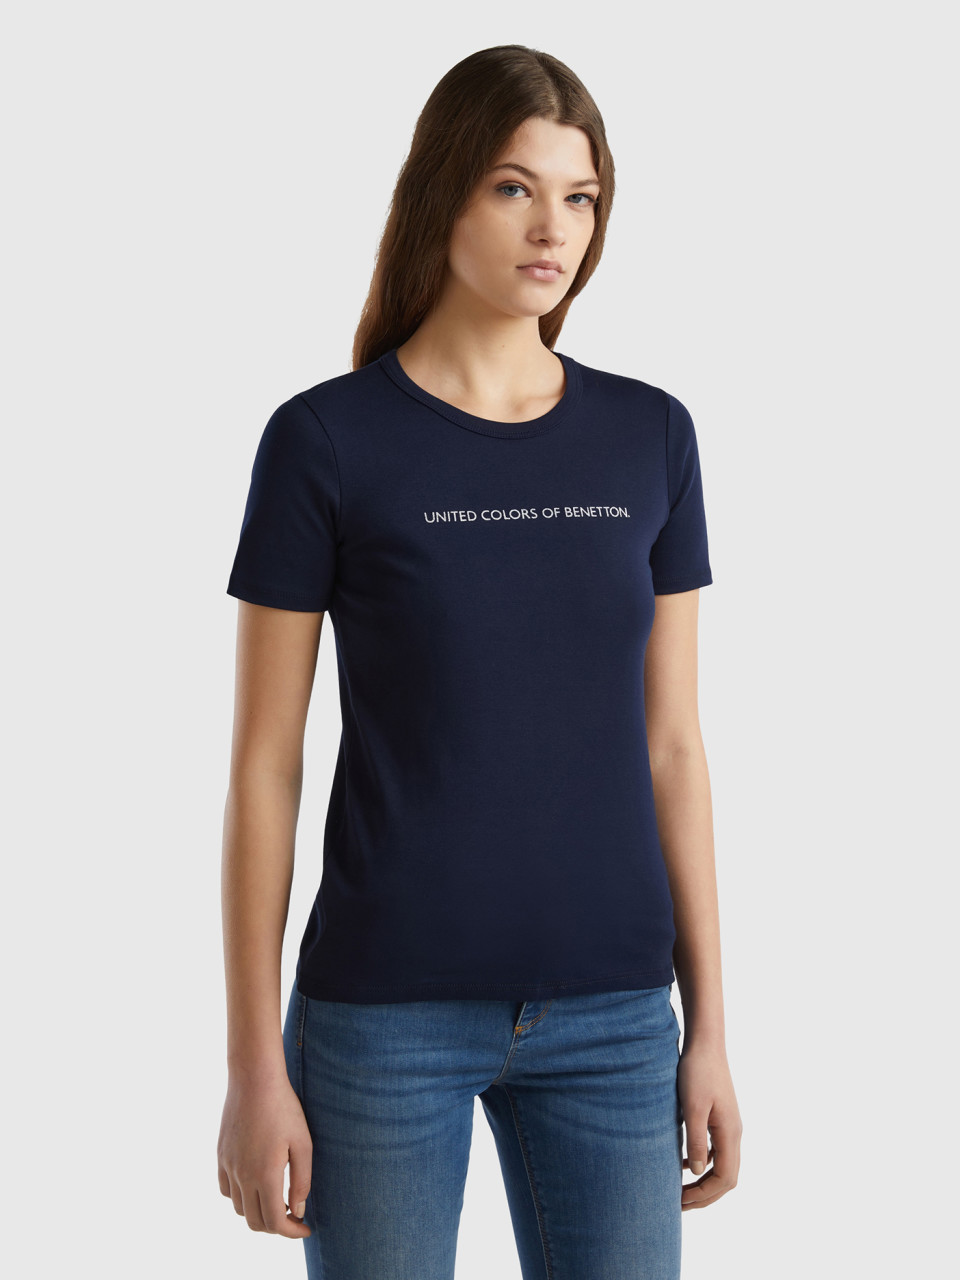 Benetton, T-shirt In 100% Cotton With Glitter Print Logo, Dark Blue, Women